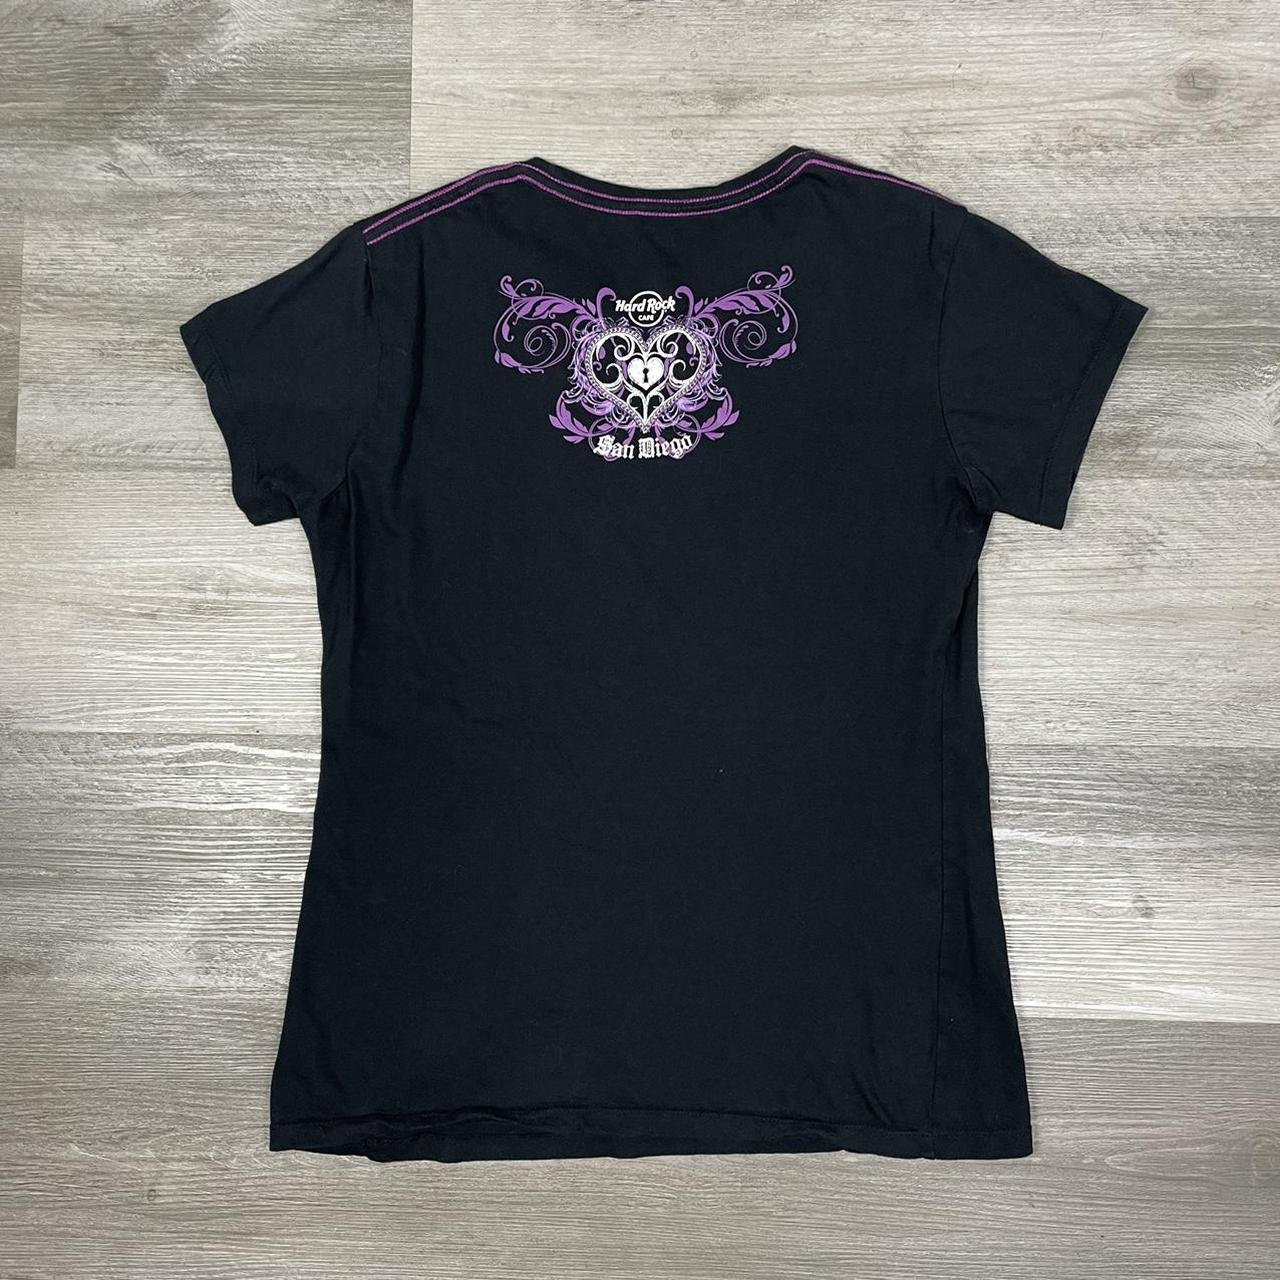 Hard Rock Cafe Women's Black and Purple T-shirt (2)